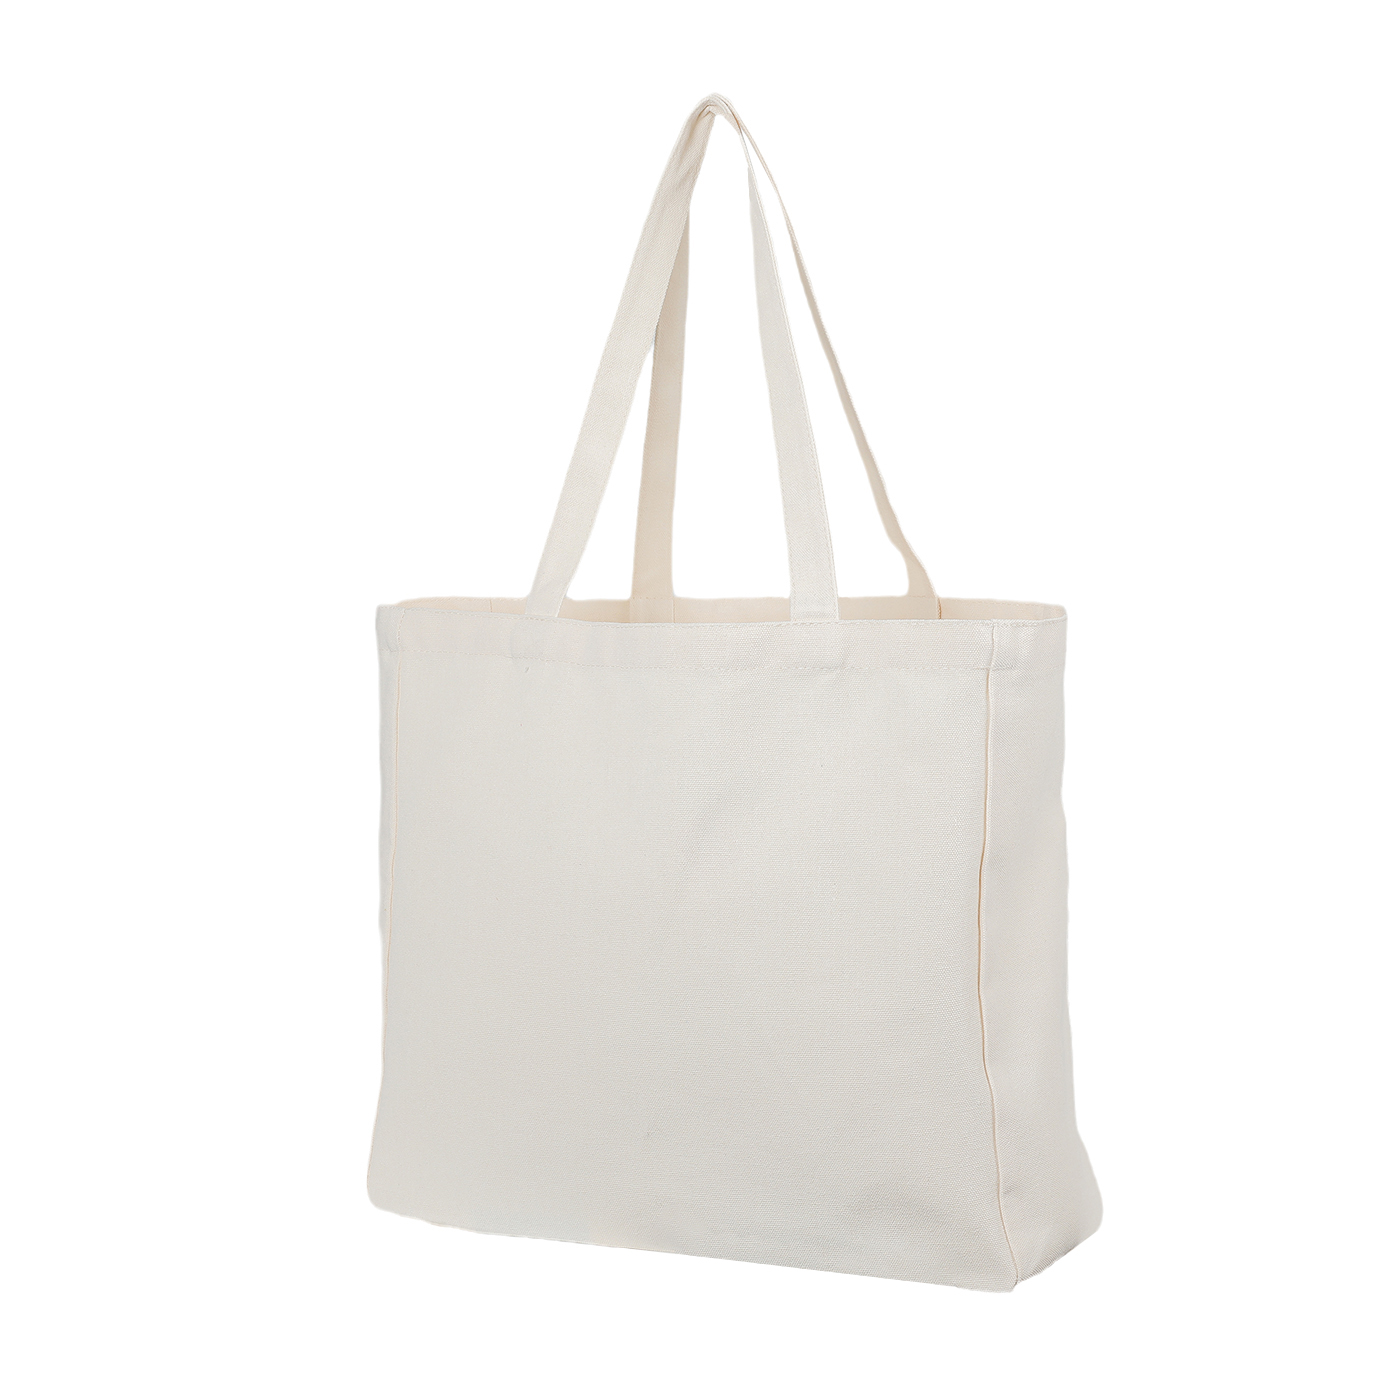 12 oz. Canvas Shopping Tote Bag1